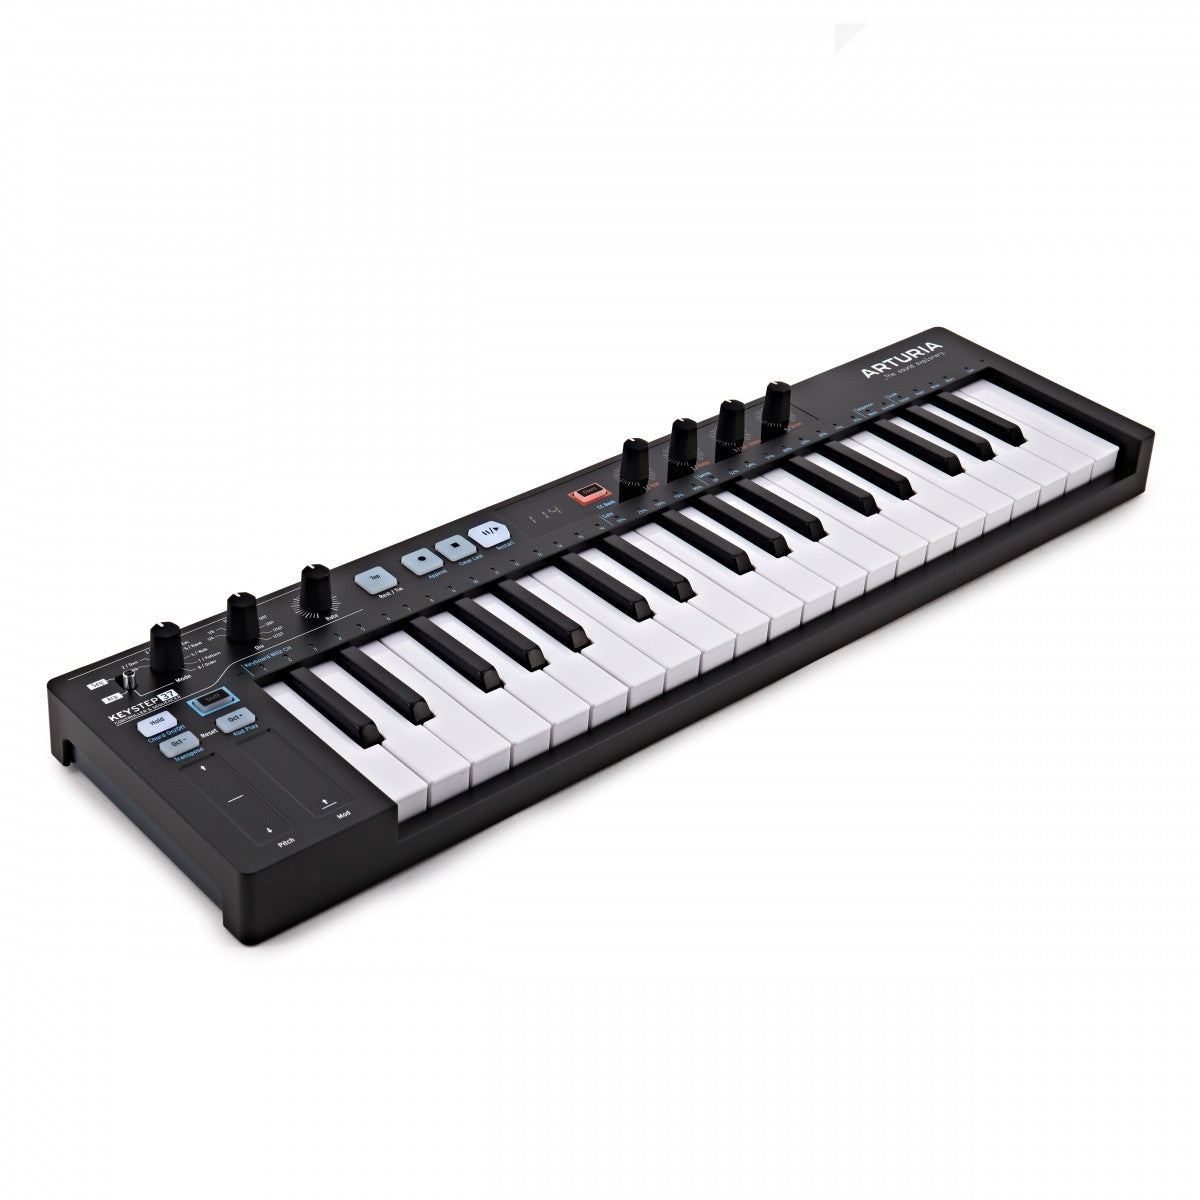 KeyStep 37 Black Edition　Arturia　MIDI鍵盤機材整理のため出品いたします